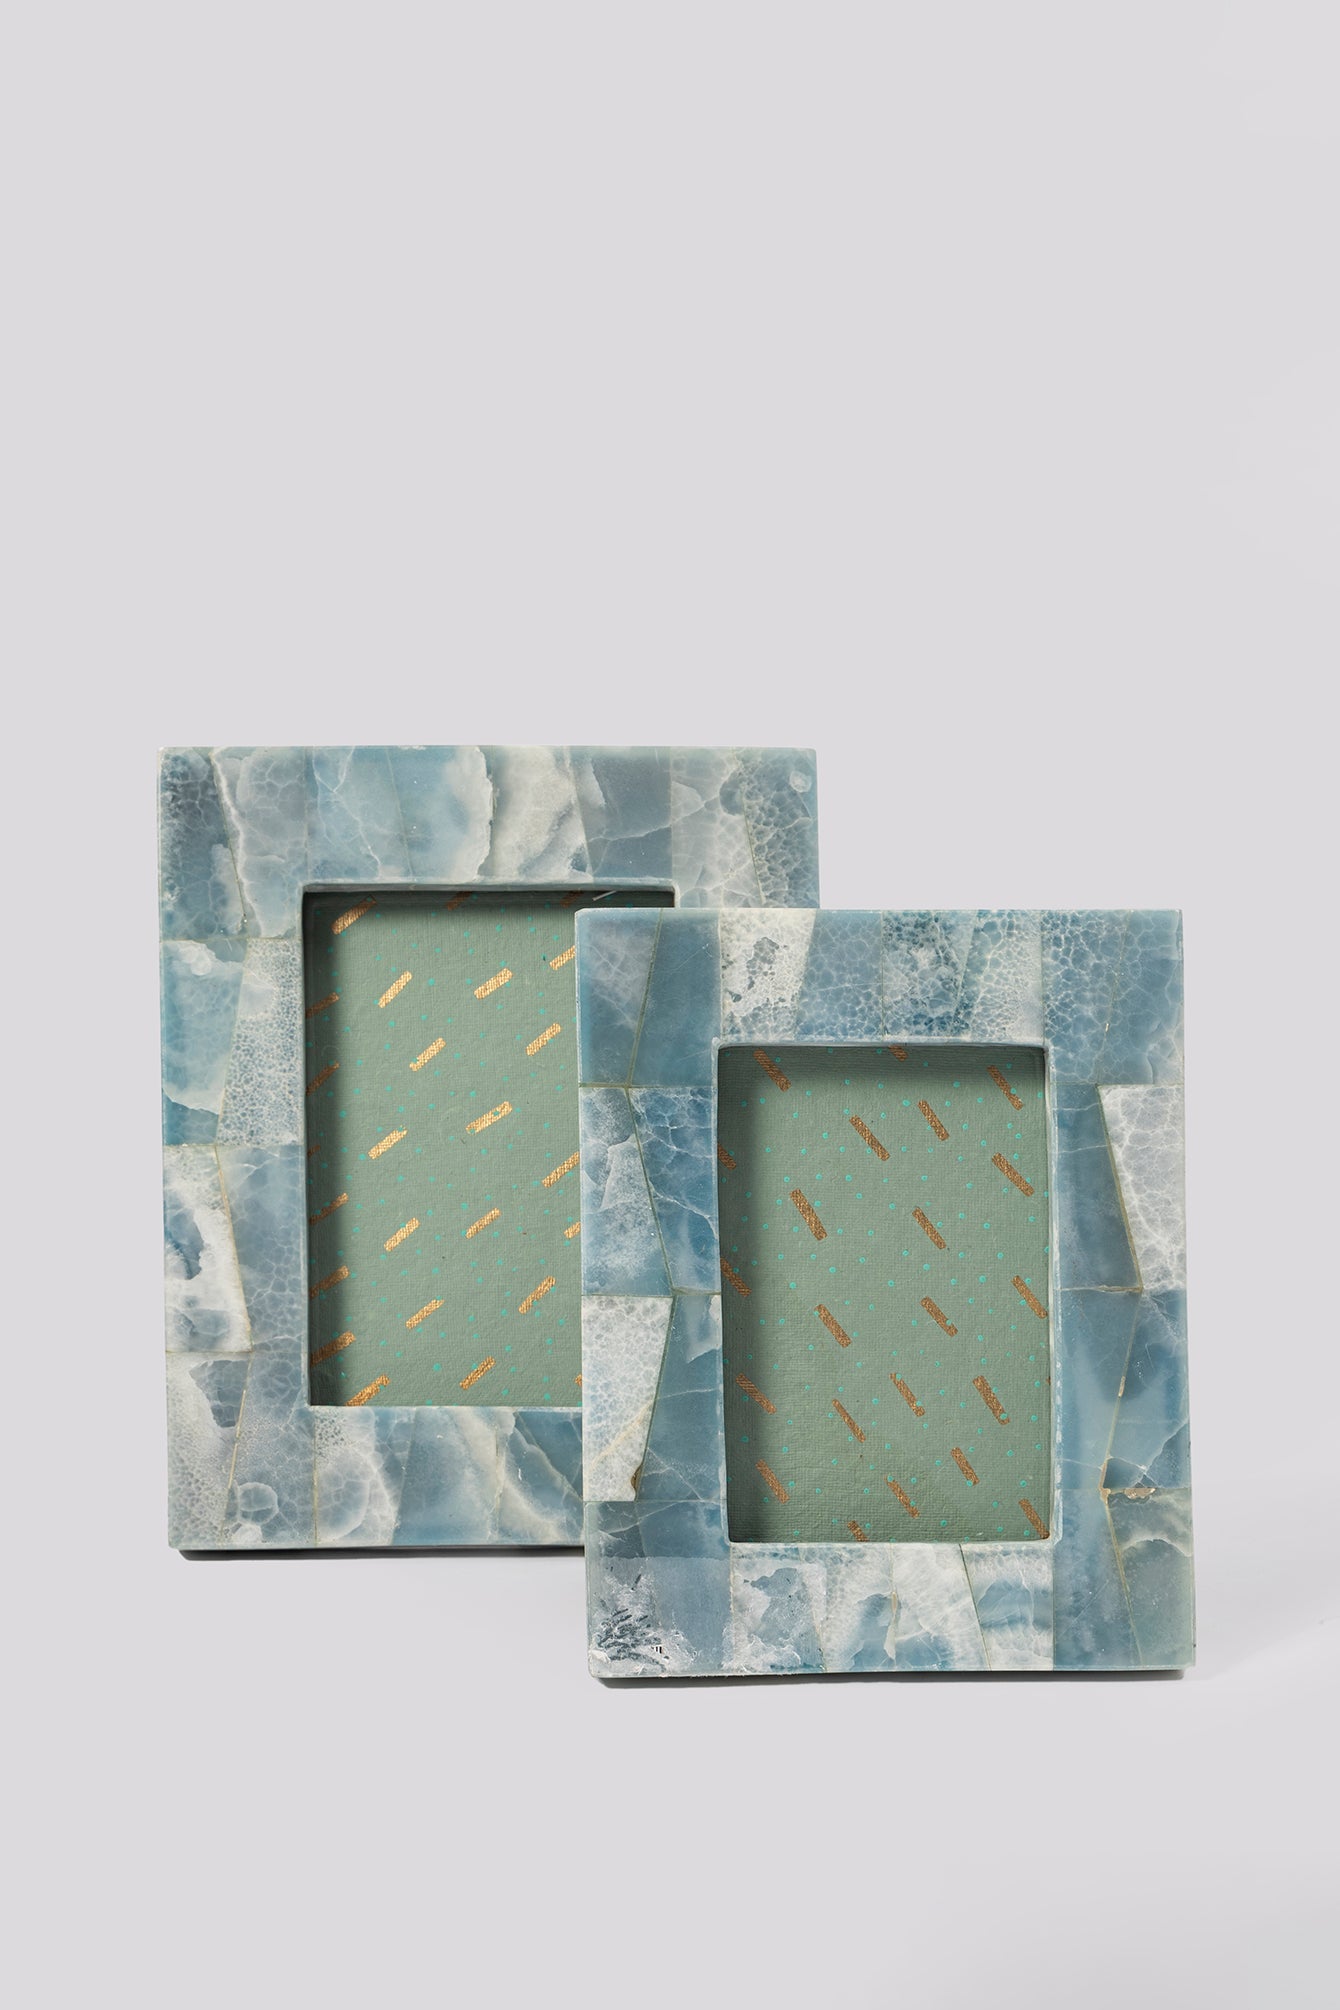 Sanok Stone Overlay Photo Frame With Glass (Set of Two)